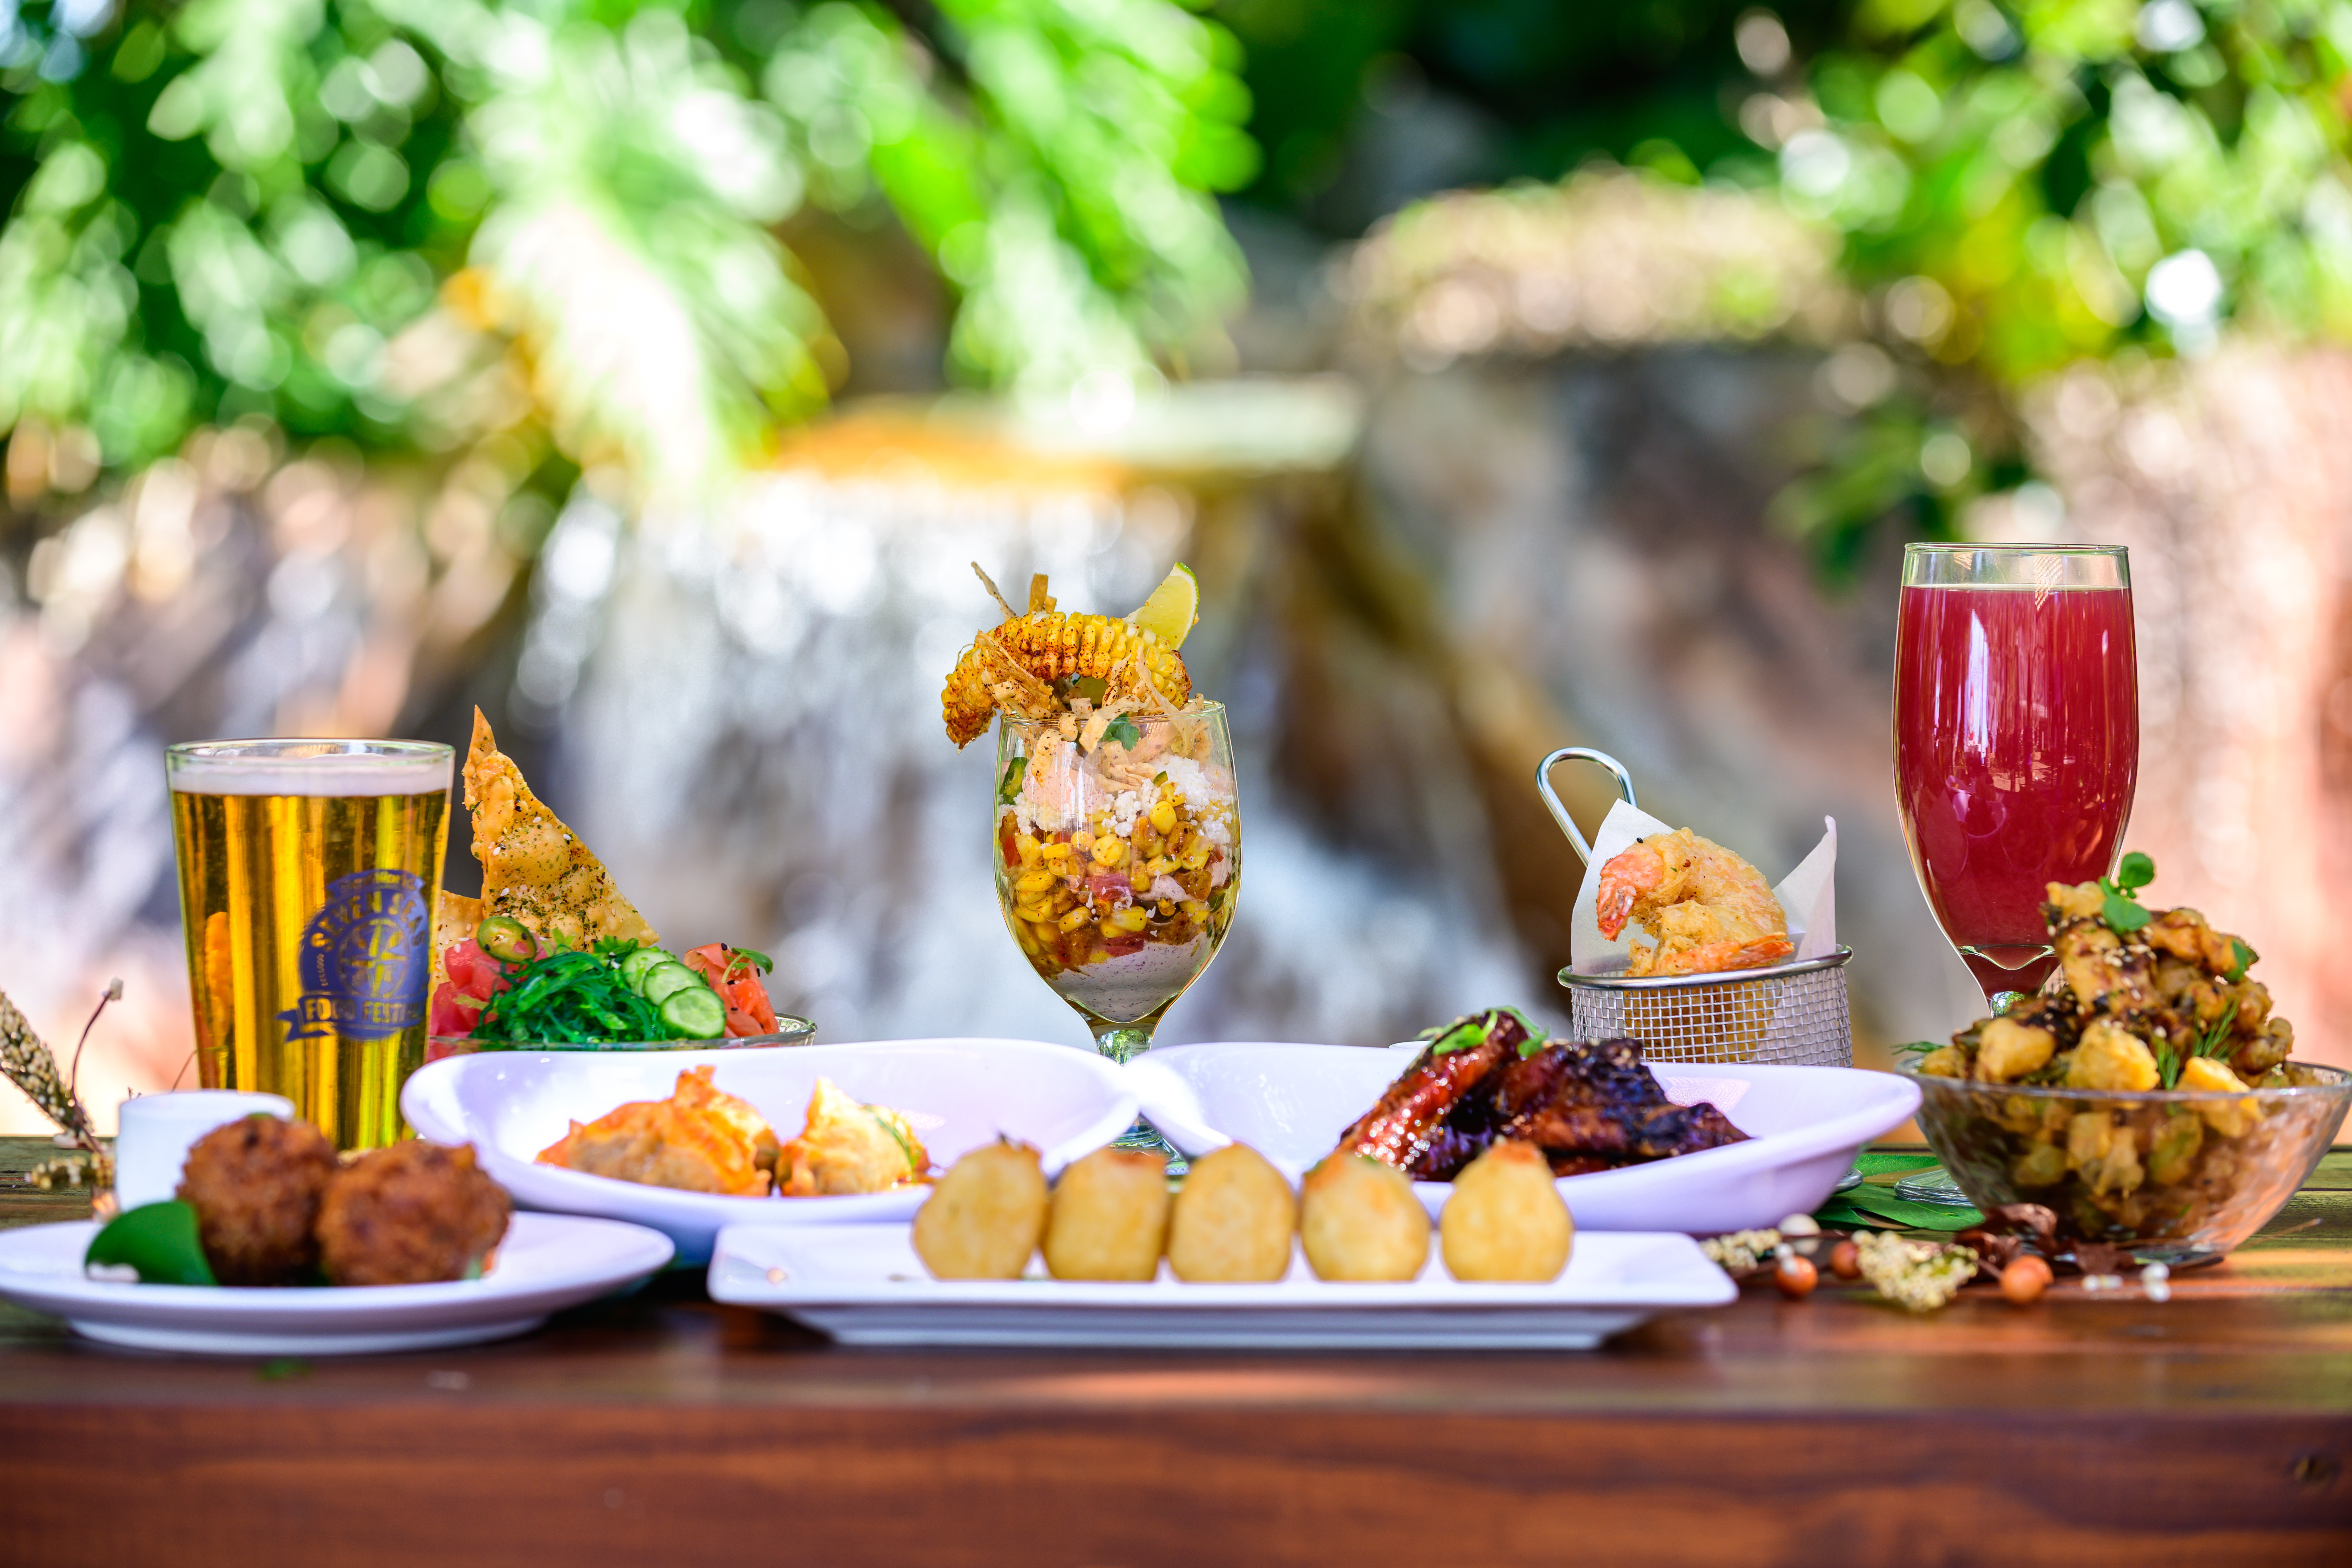 Seaworld Orlando’s Seven Seas Food Festival Starts February 5th